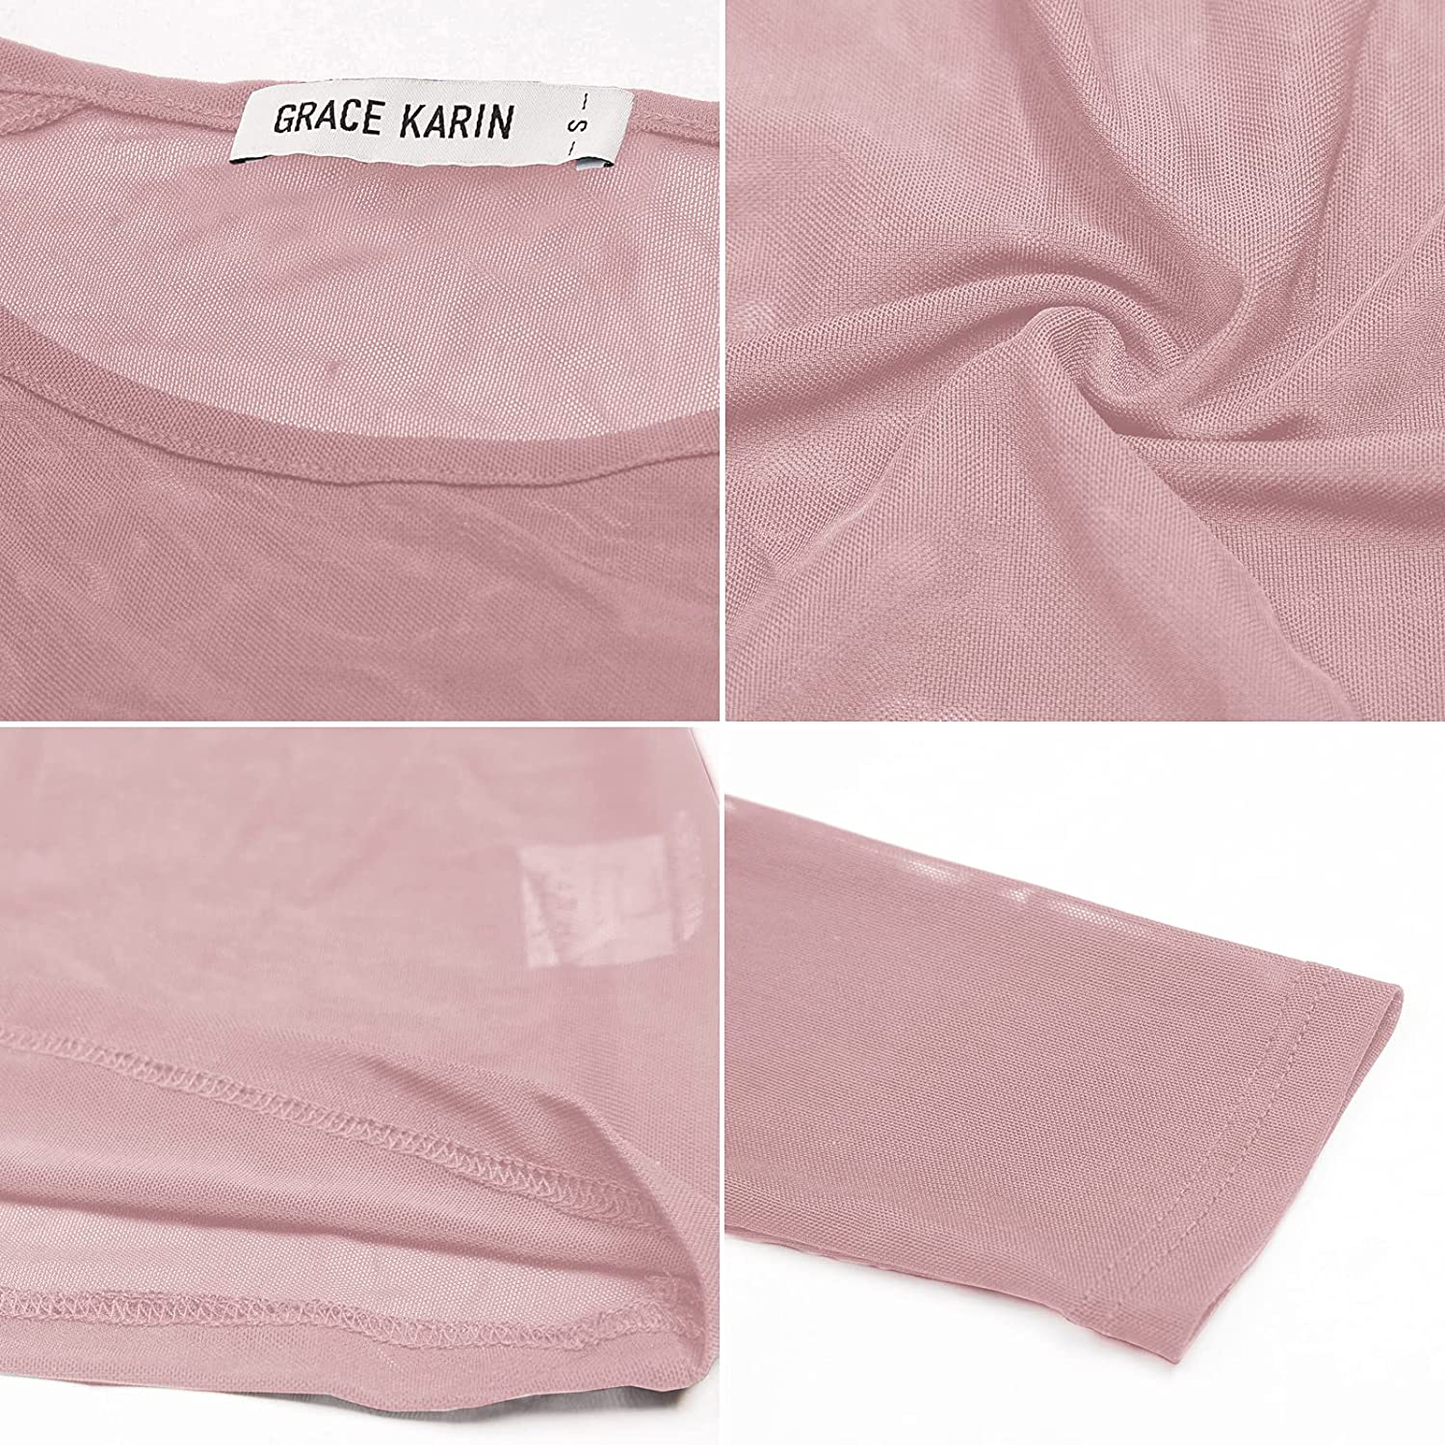 GRACE KARIN Women's Long Sleeve See Through Mesh Sheer Top Blouse Shirt